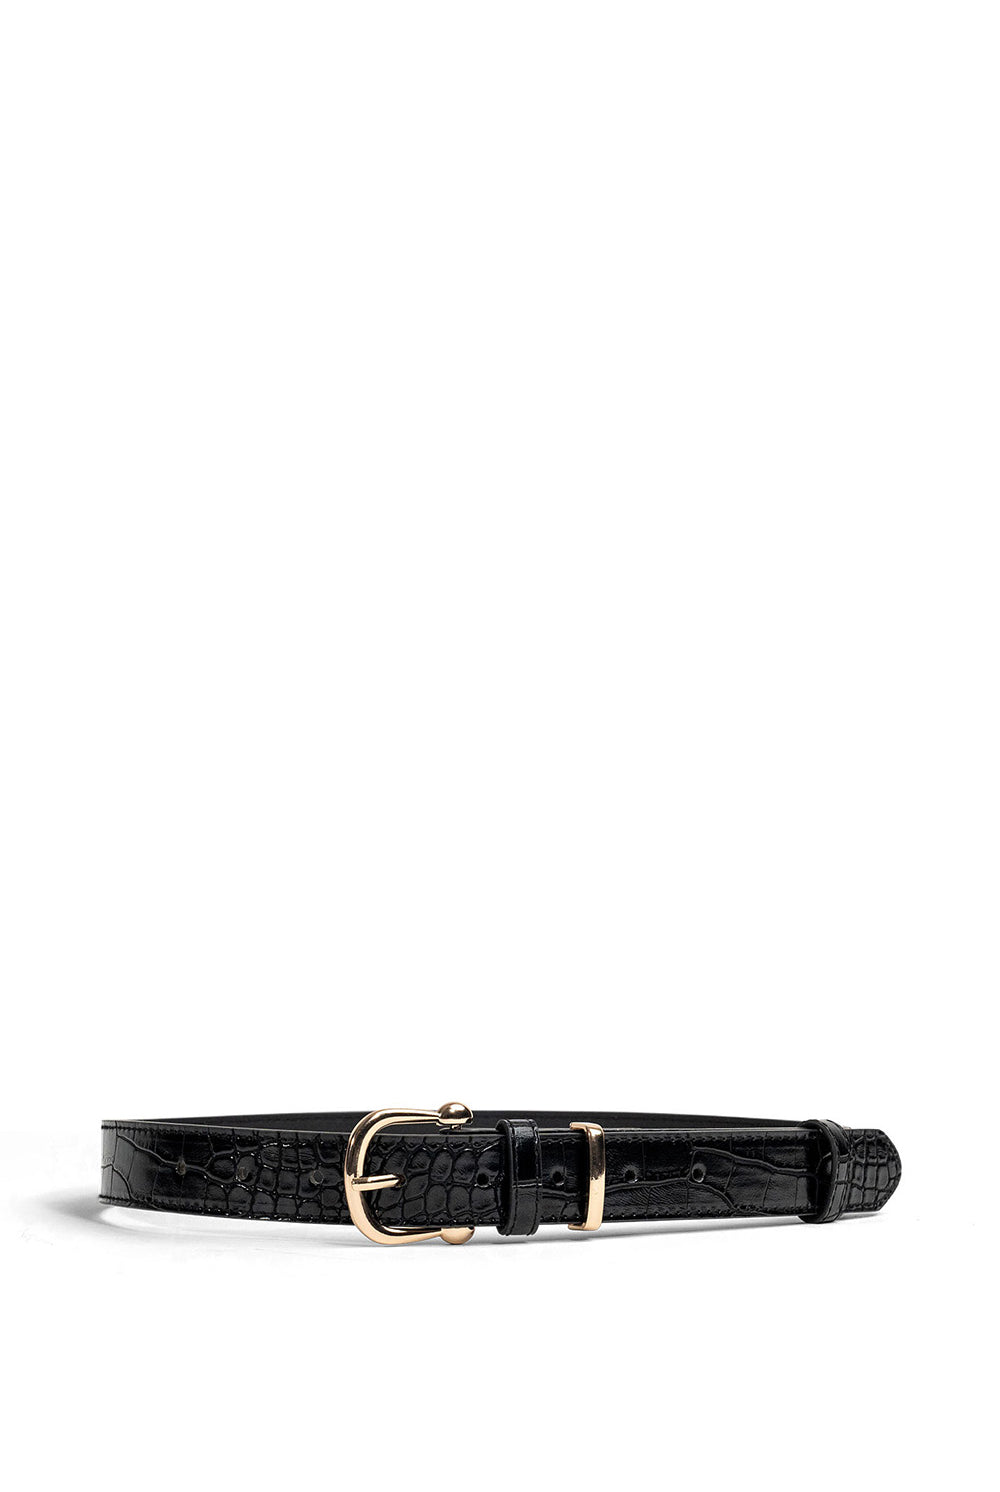 My Accessories London Minimal Croc Belt in Black | Belts | Women | Women's |  Casual  |  Everyday | Essential | Animal Print  